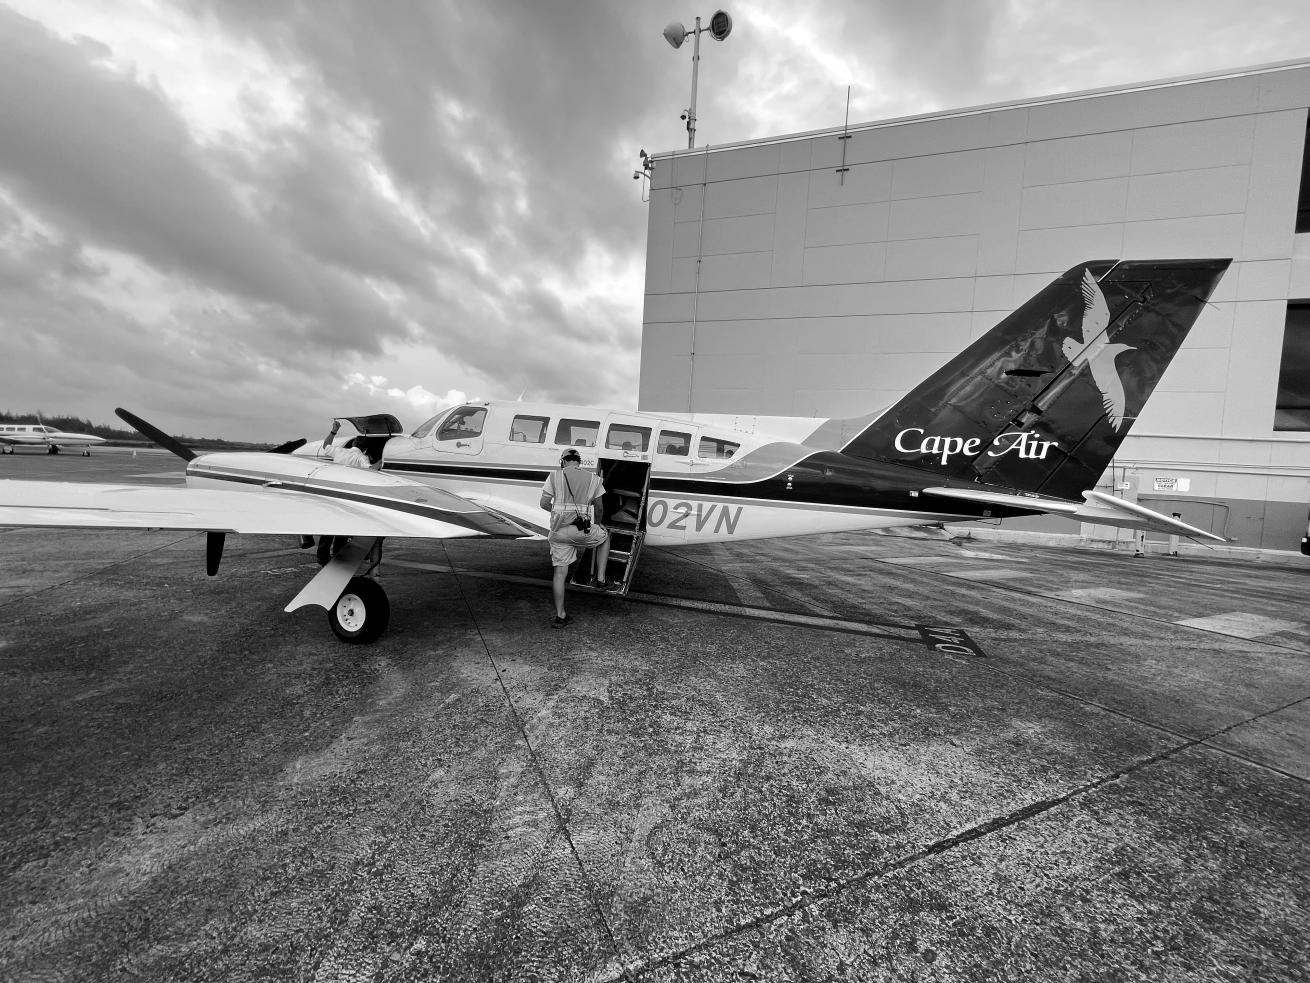 Cape Air Flight